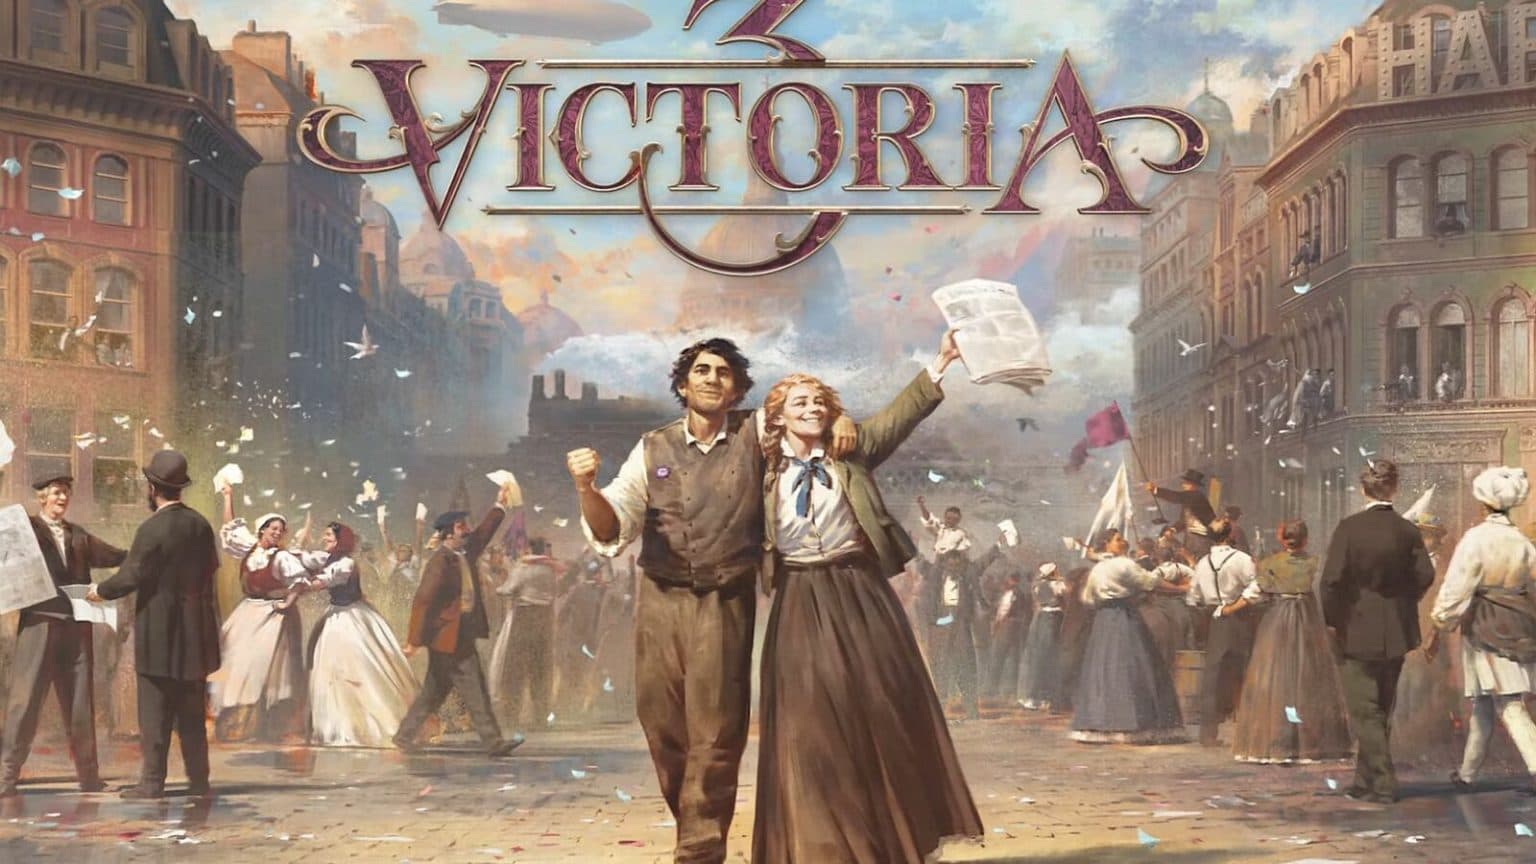 Victoria 3 downloading